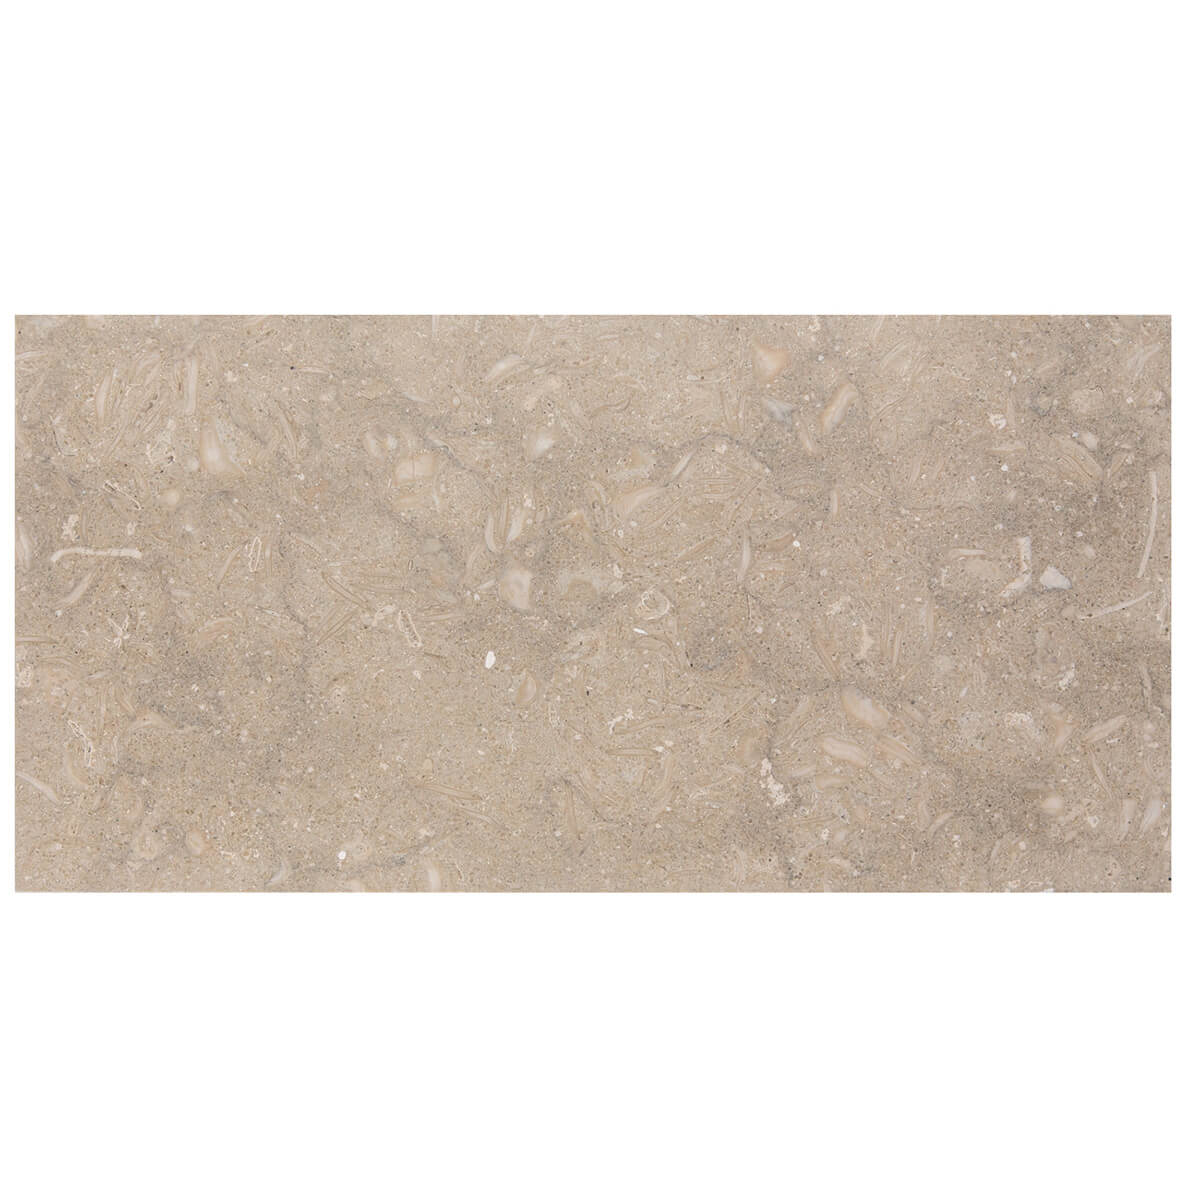 haussmann pistache seagrass limestone rectangle natural stone field tile 12x24 honed